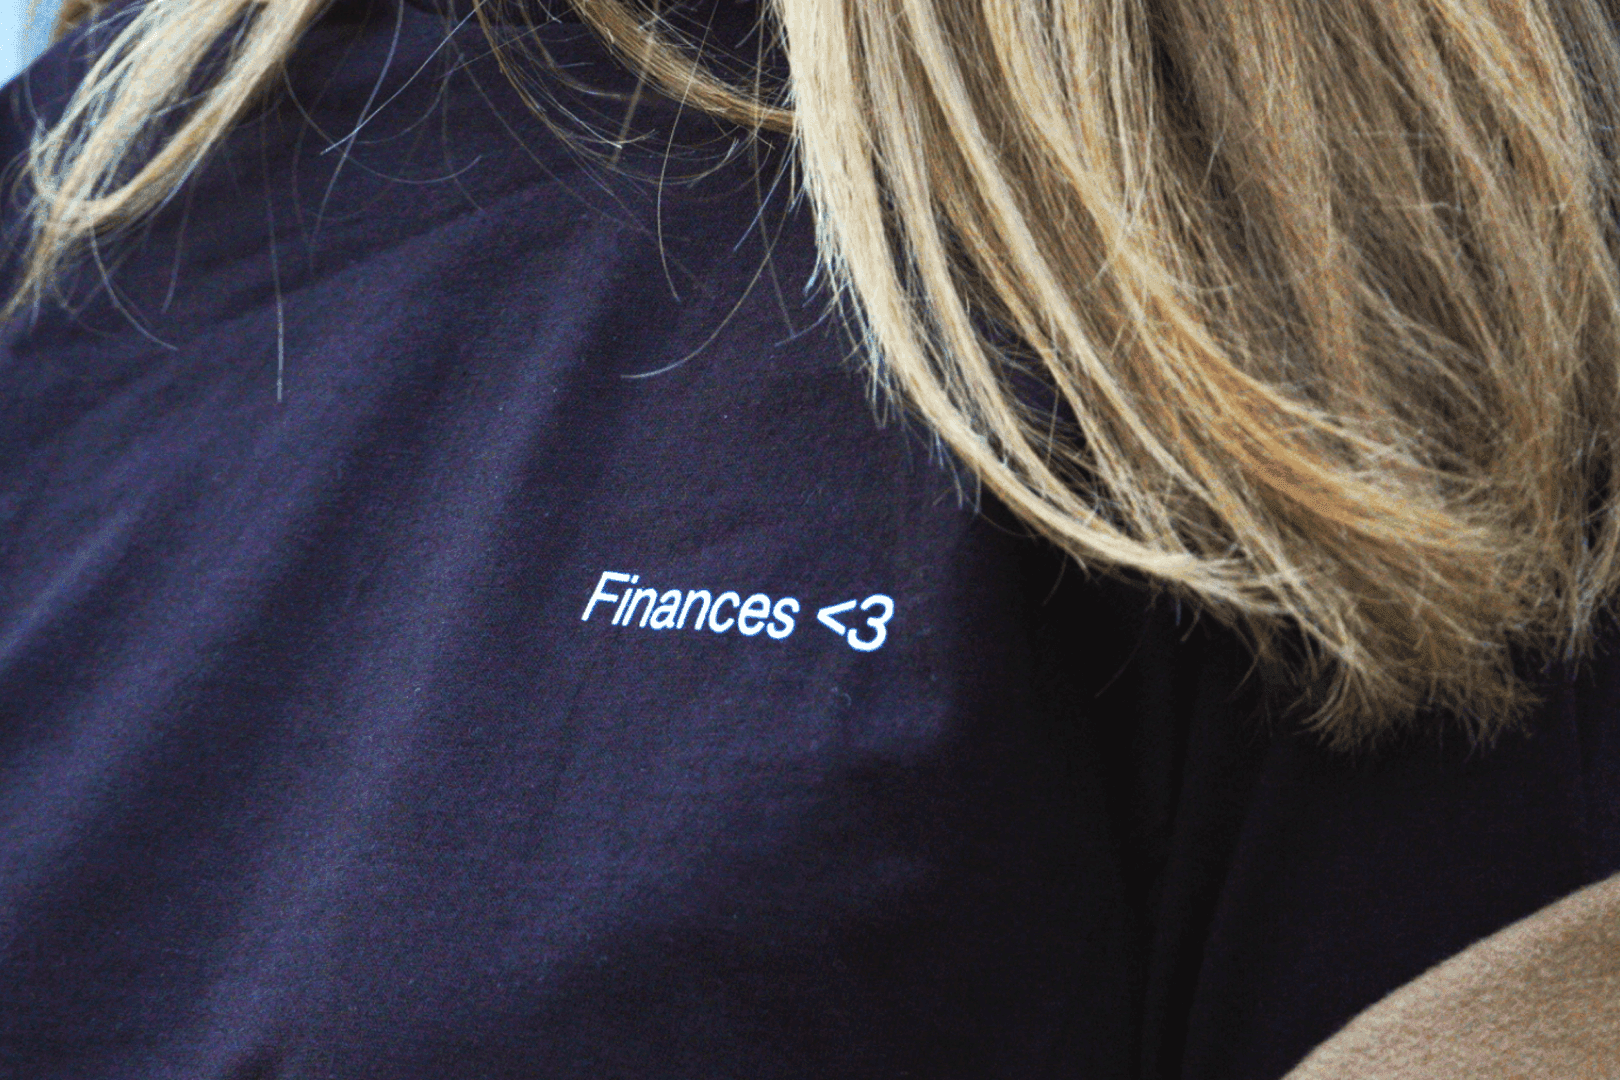 En svart tröja som det står "Finances <3" på.